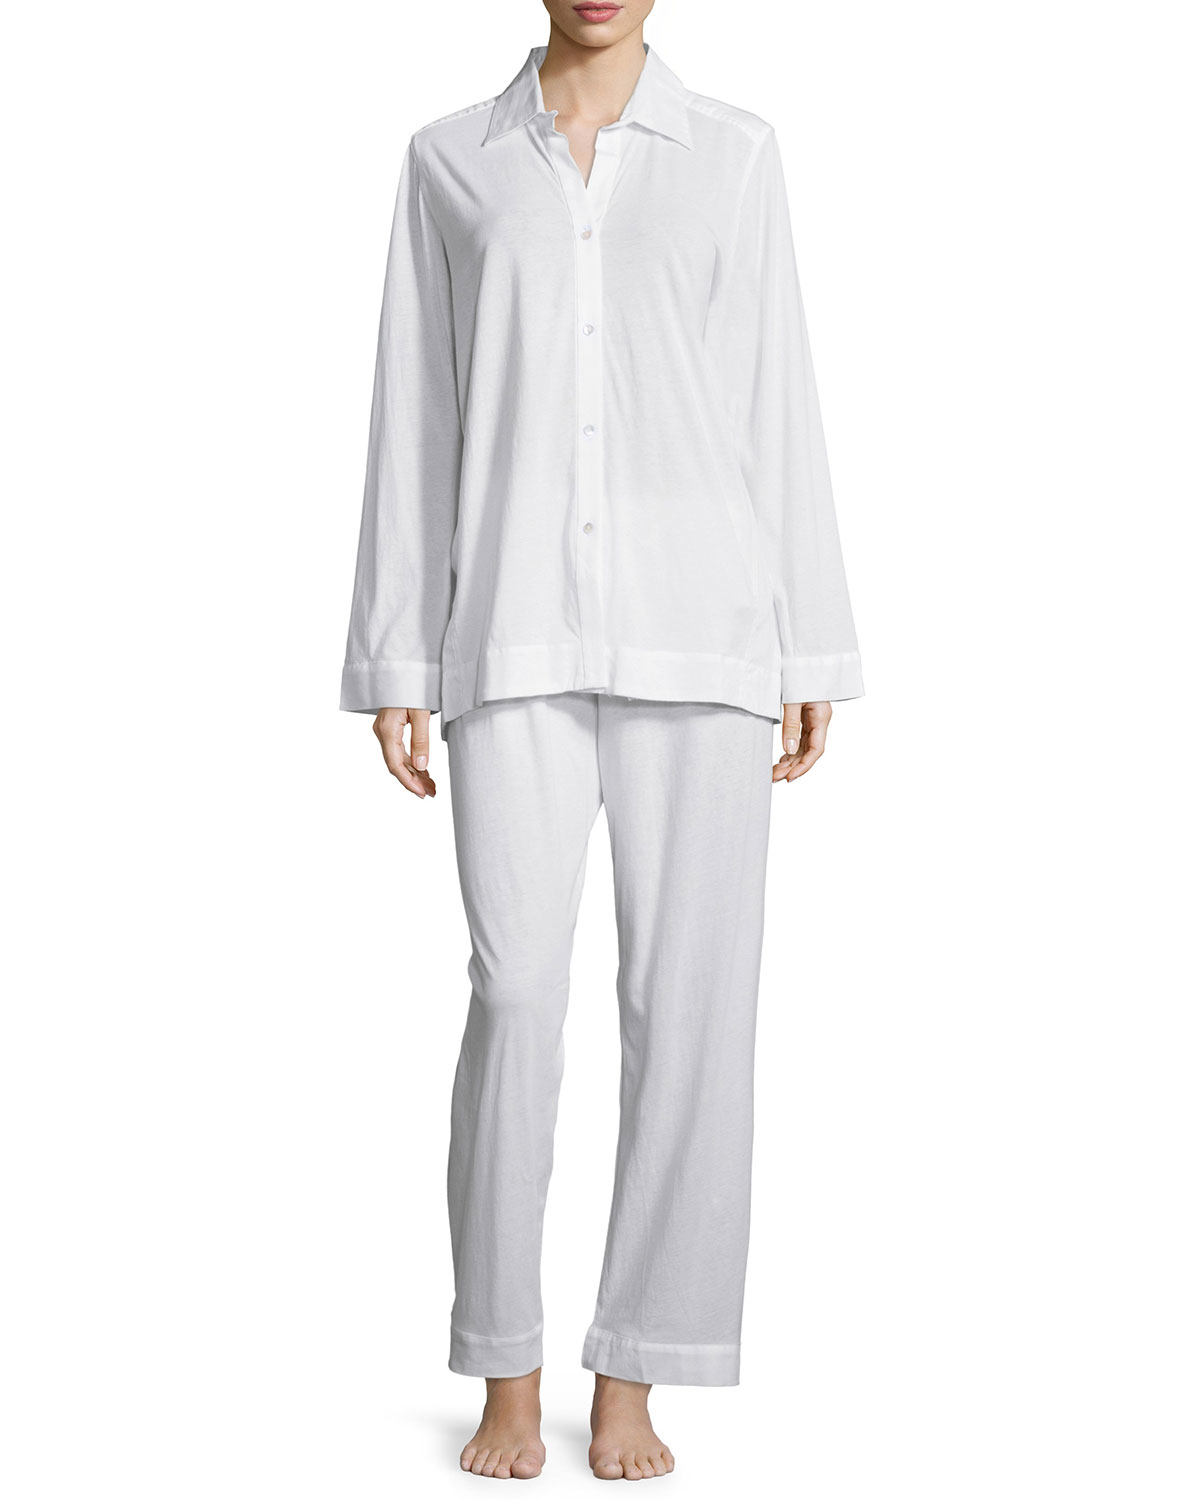 Lyst - Donna Karan Pima Cotton Pajama Set in White